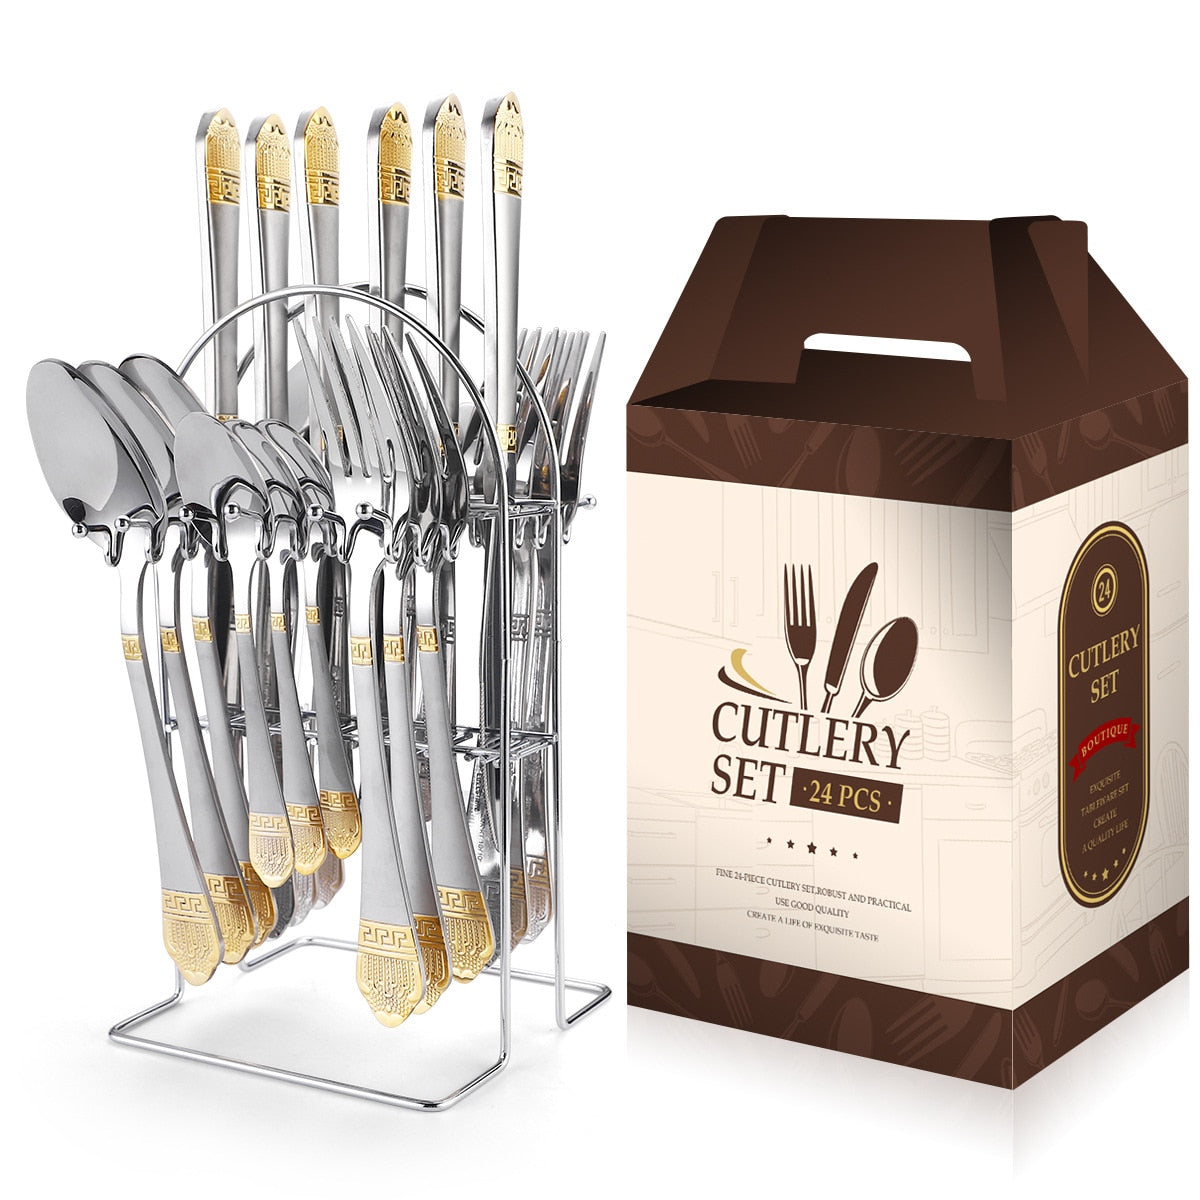 24 Pcs Stainless Steel Cutlery Hammer Pattern Ceramic Handle Knife Fork Spoon Set cutlery set travel cutlery set flatware set - kmtell.com